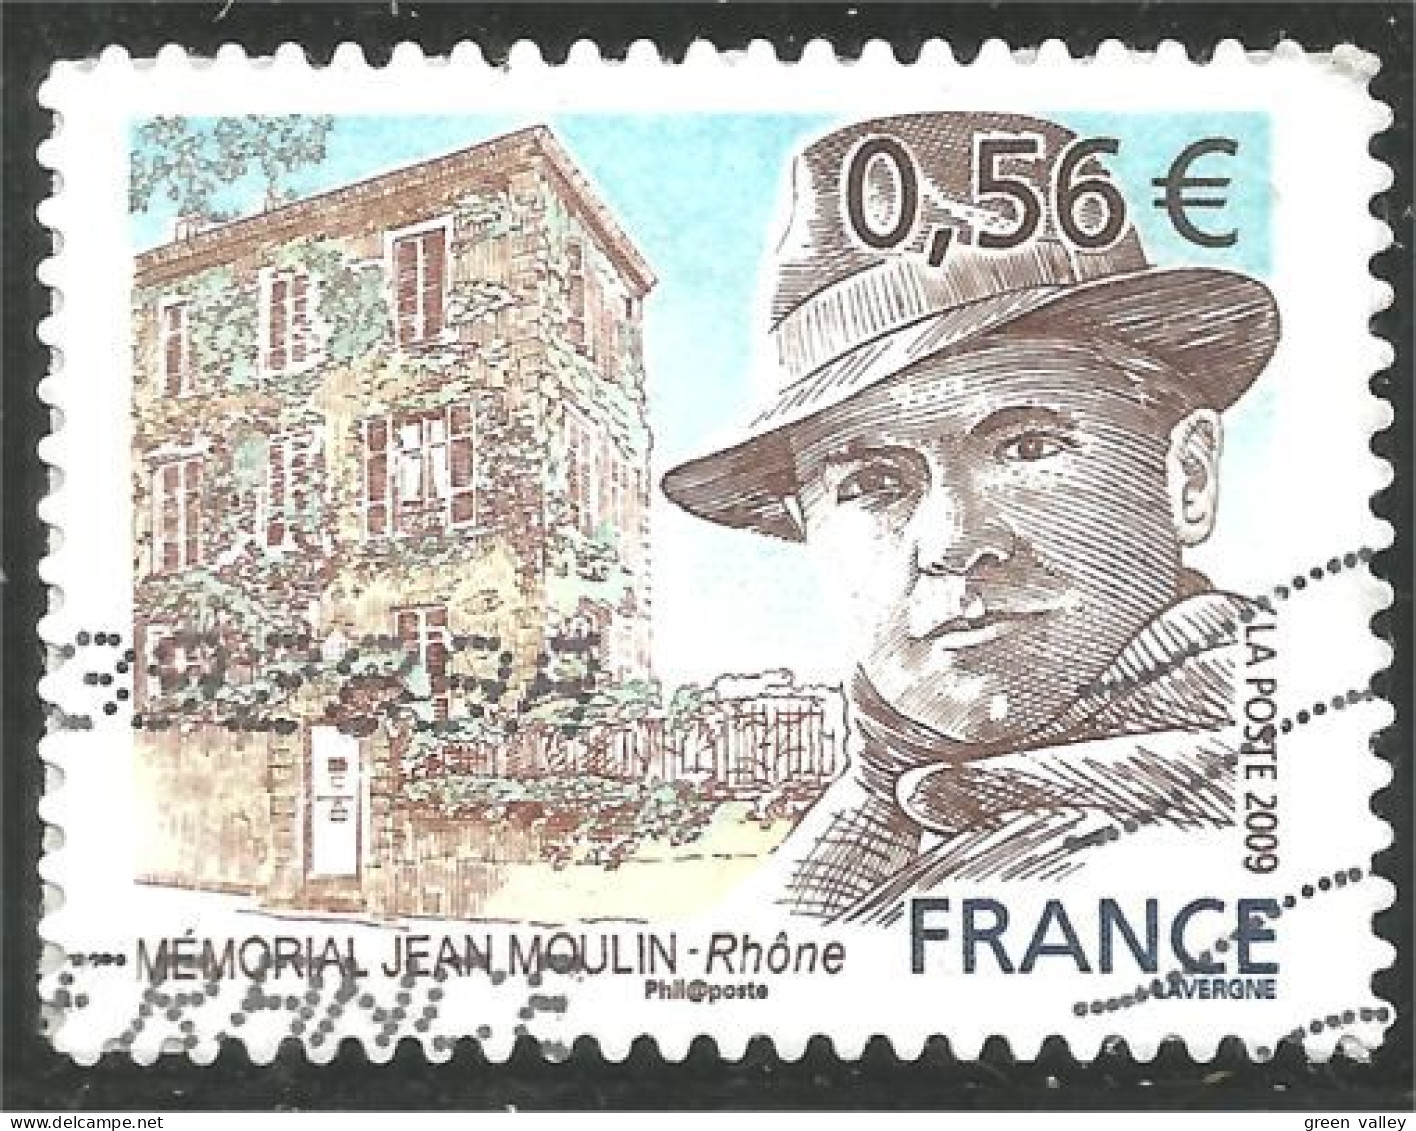 331eu-246 France Jean Moulin Résistant Guerre Occupation War - Militaria